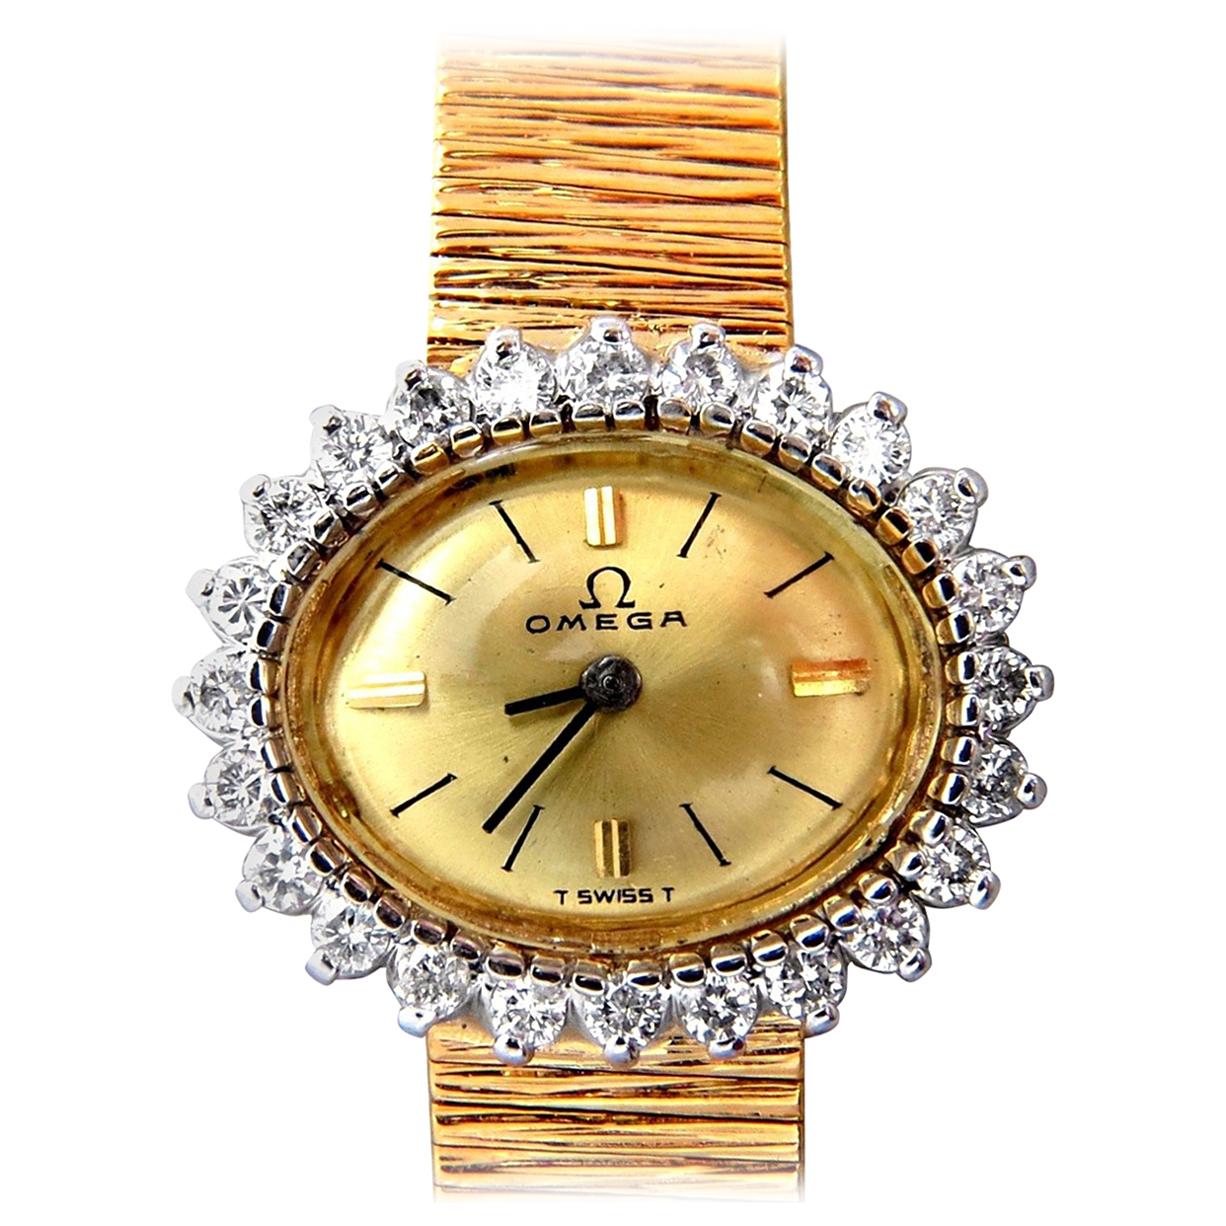 Omega Ladies Diamond Watch 14 Karat, 1.00 Carat Diamonds